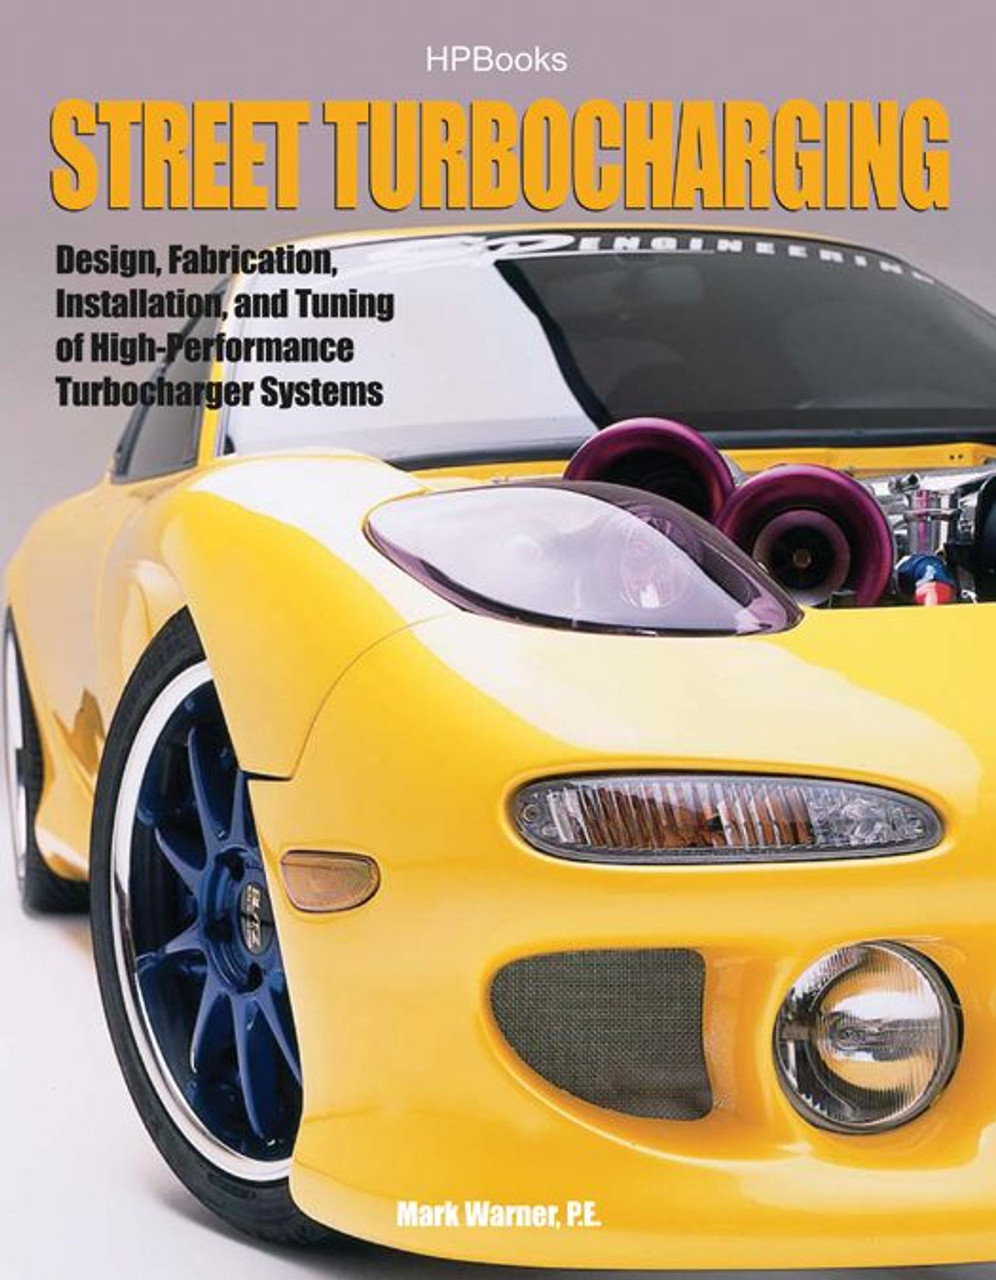 HP Books Street Turbocharging  - HPPHP1488